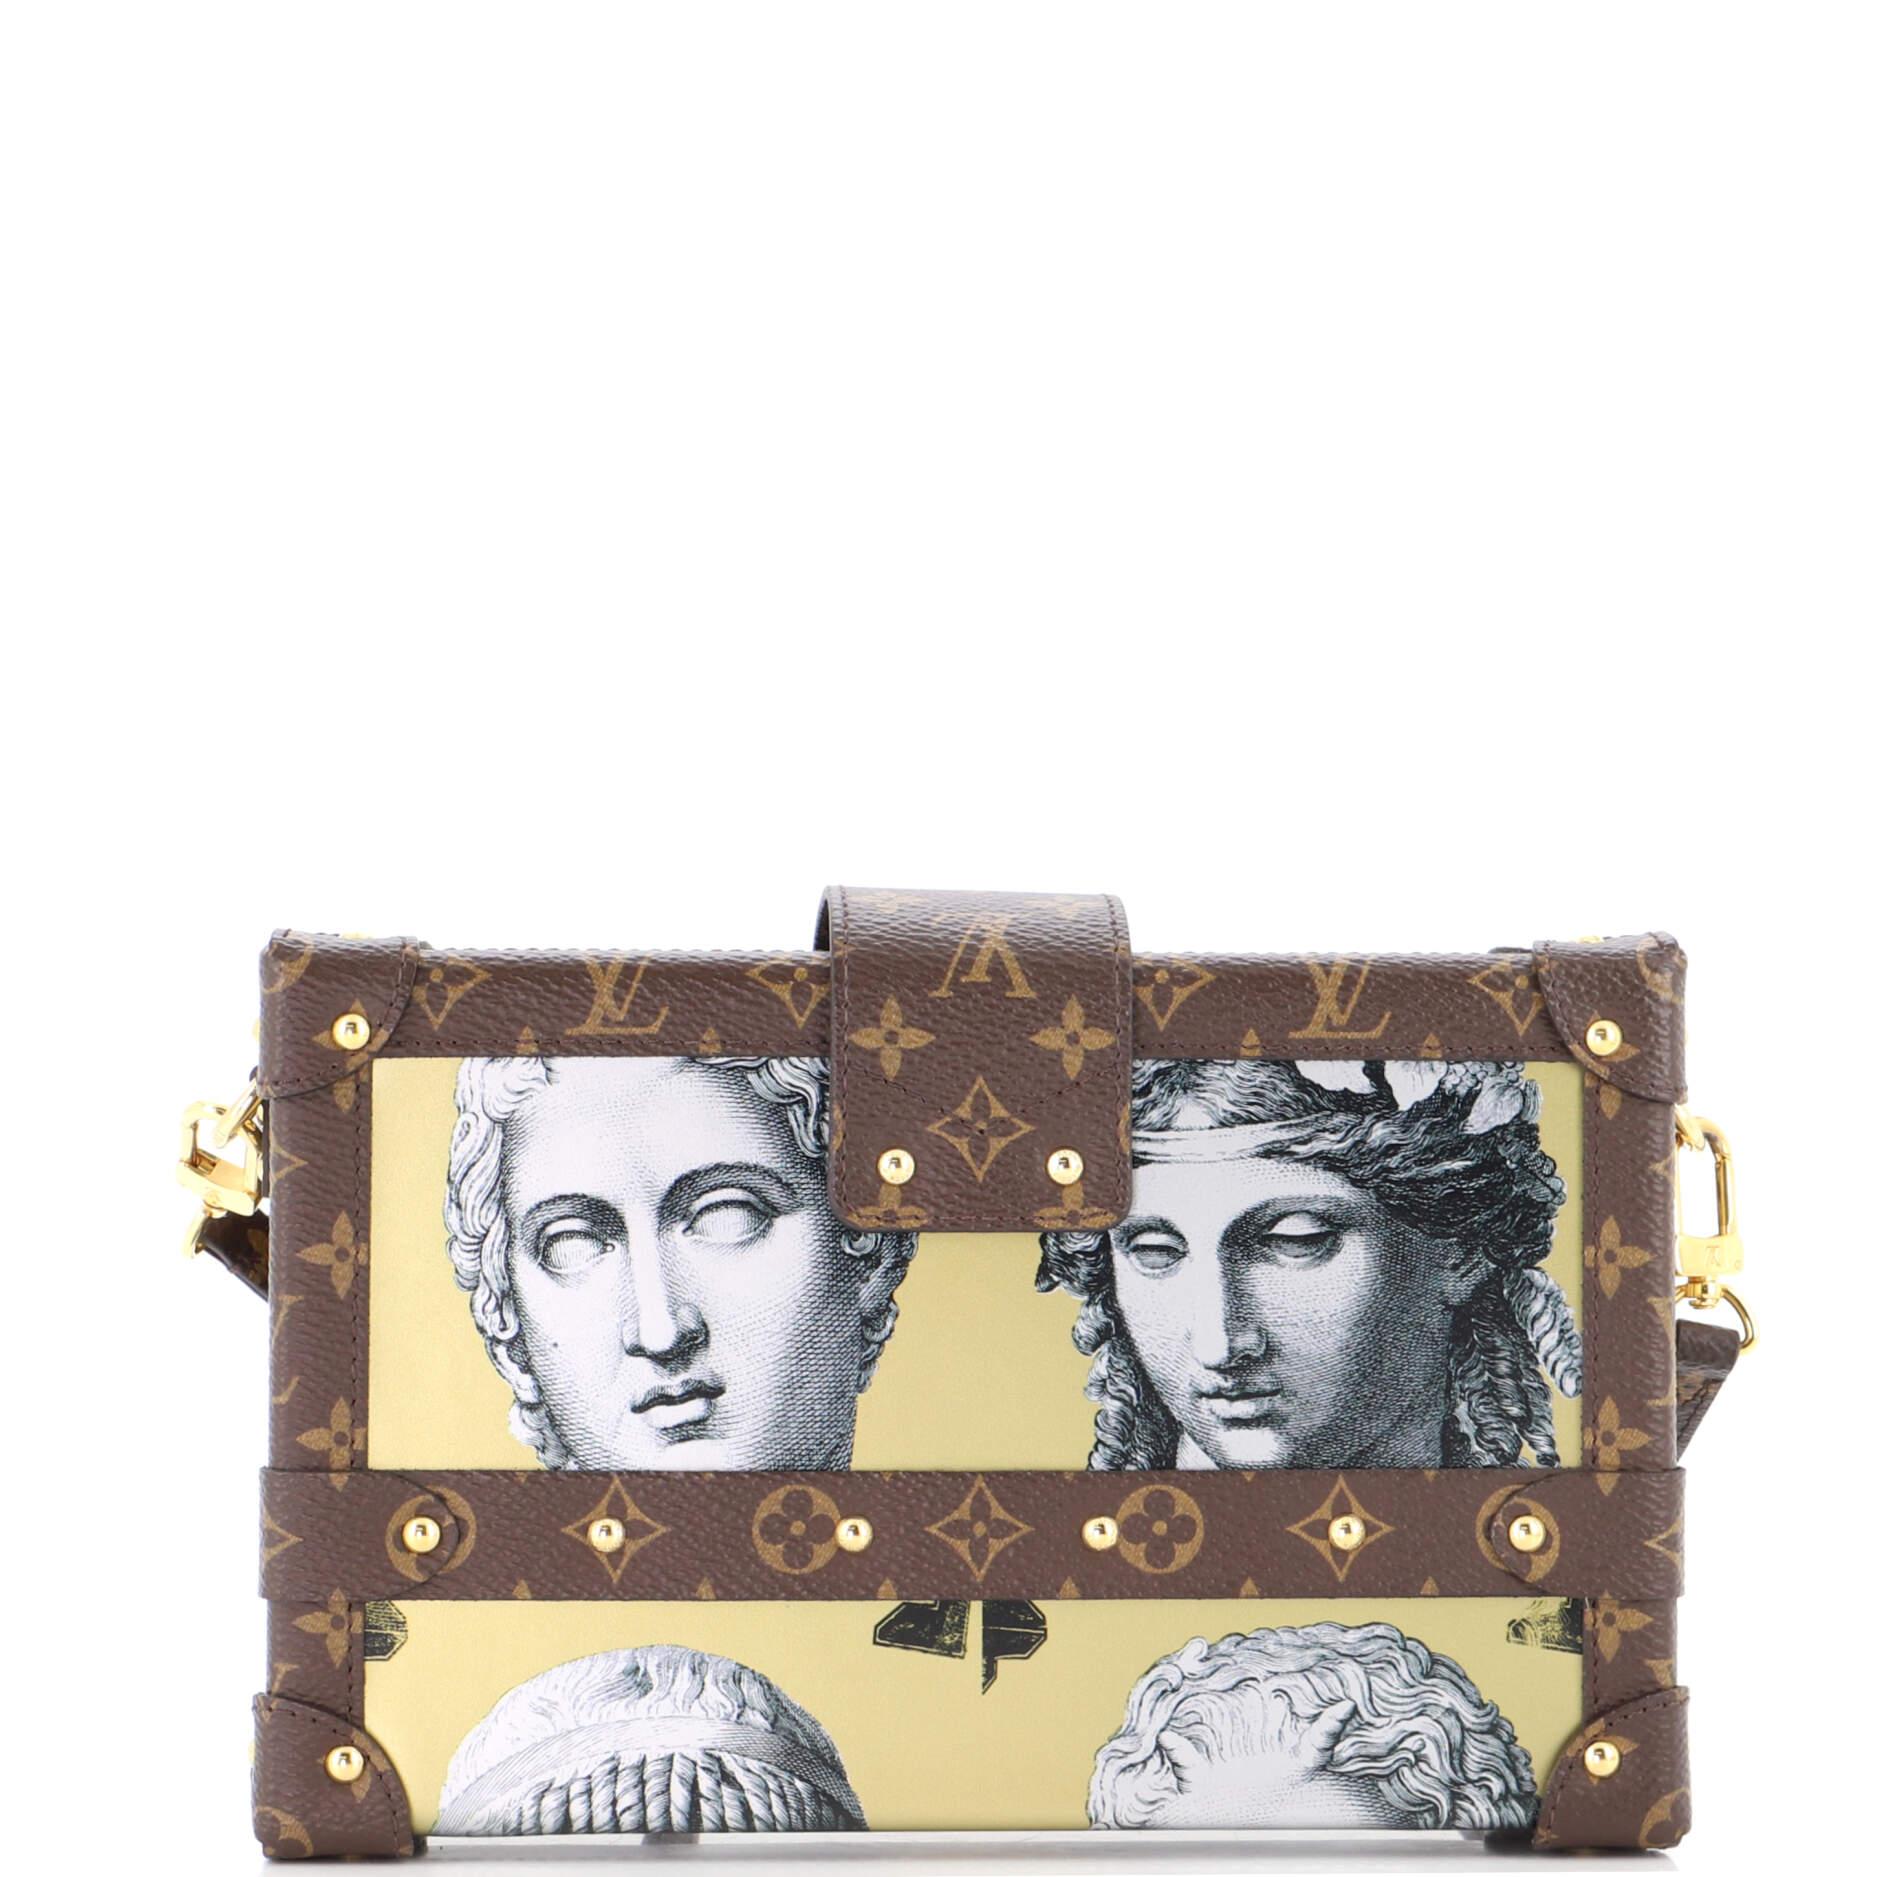 Women's or Men's Louis Vuitton Petite Malle Handbag Limited Edition Fornasetti Print Leather 